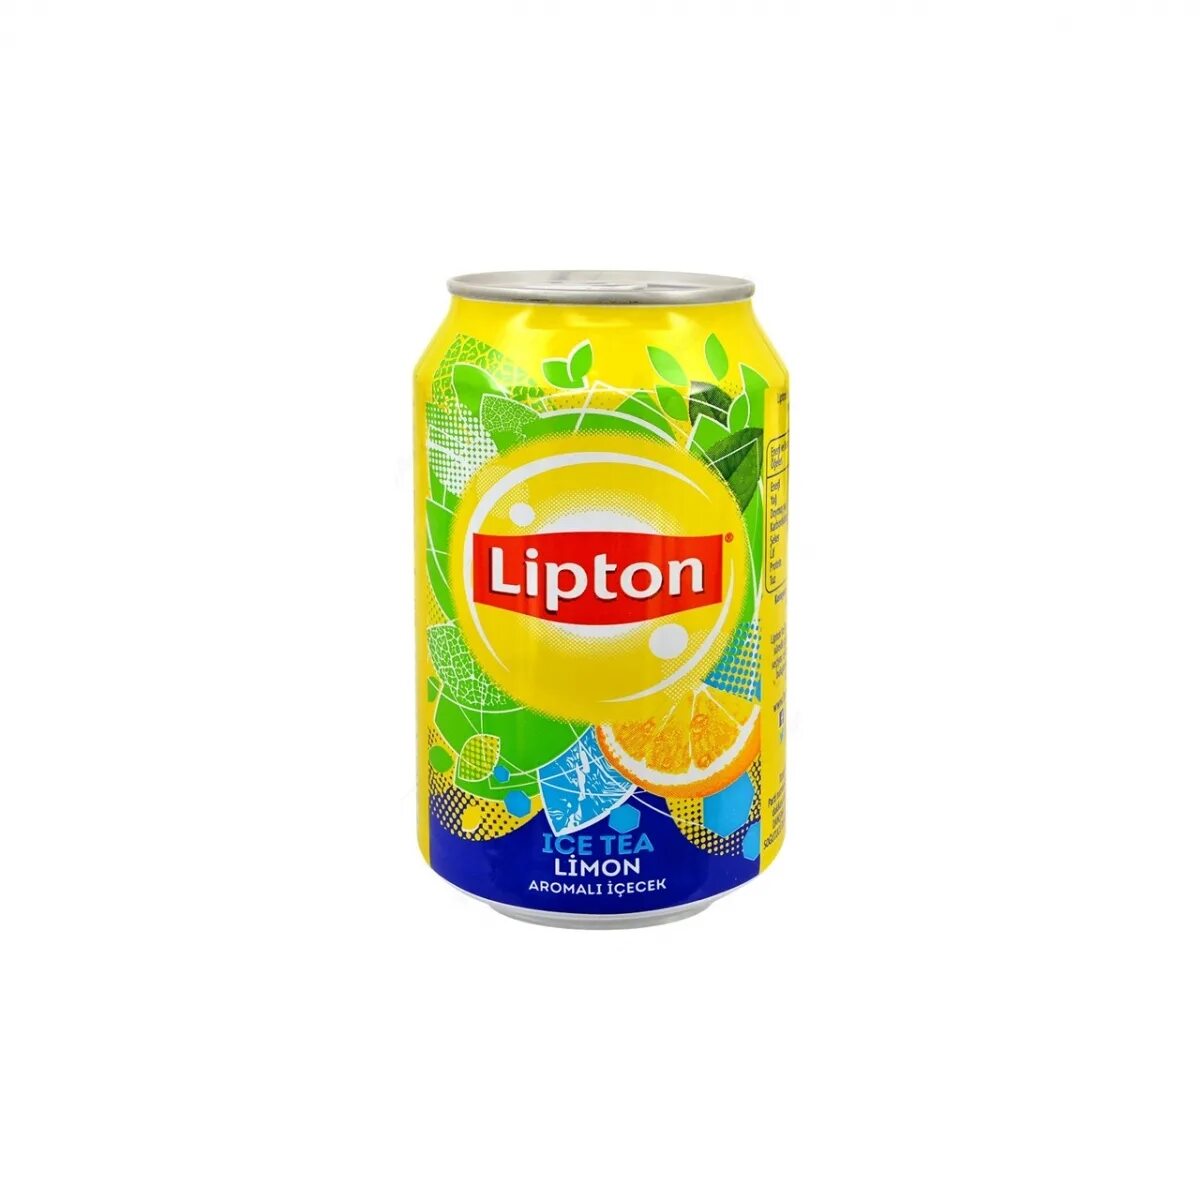 Липтон айс Теа. Lipton Ice Tea 330ml Limon x24. Lipton Mango 330 ml. Lipton Ice Tea чай. Айс чай